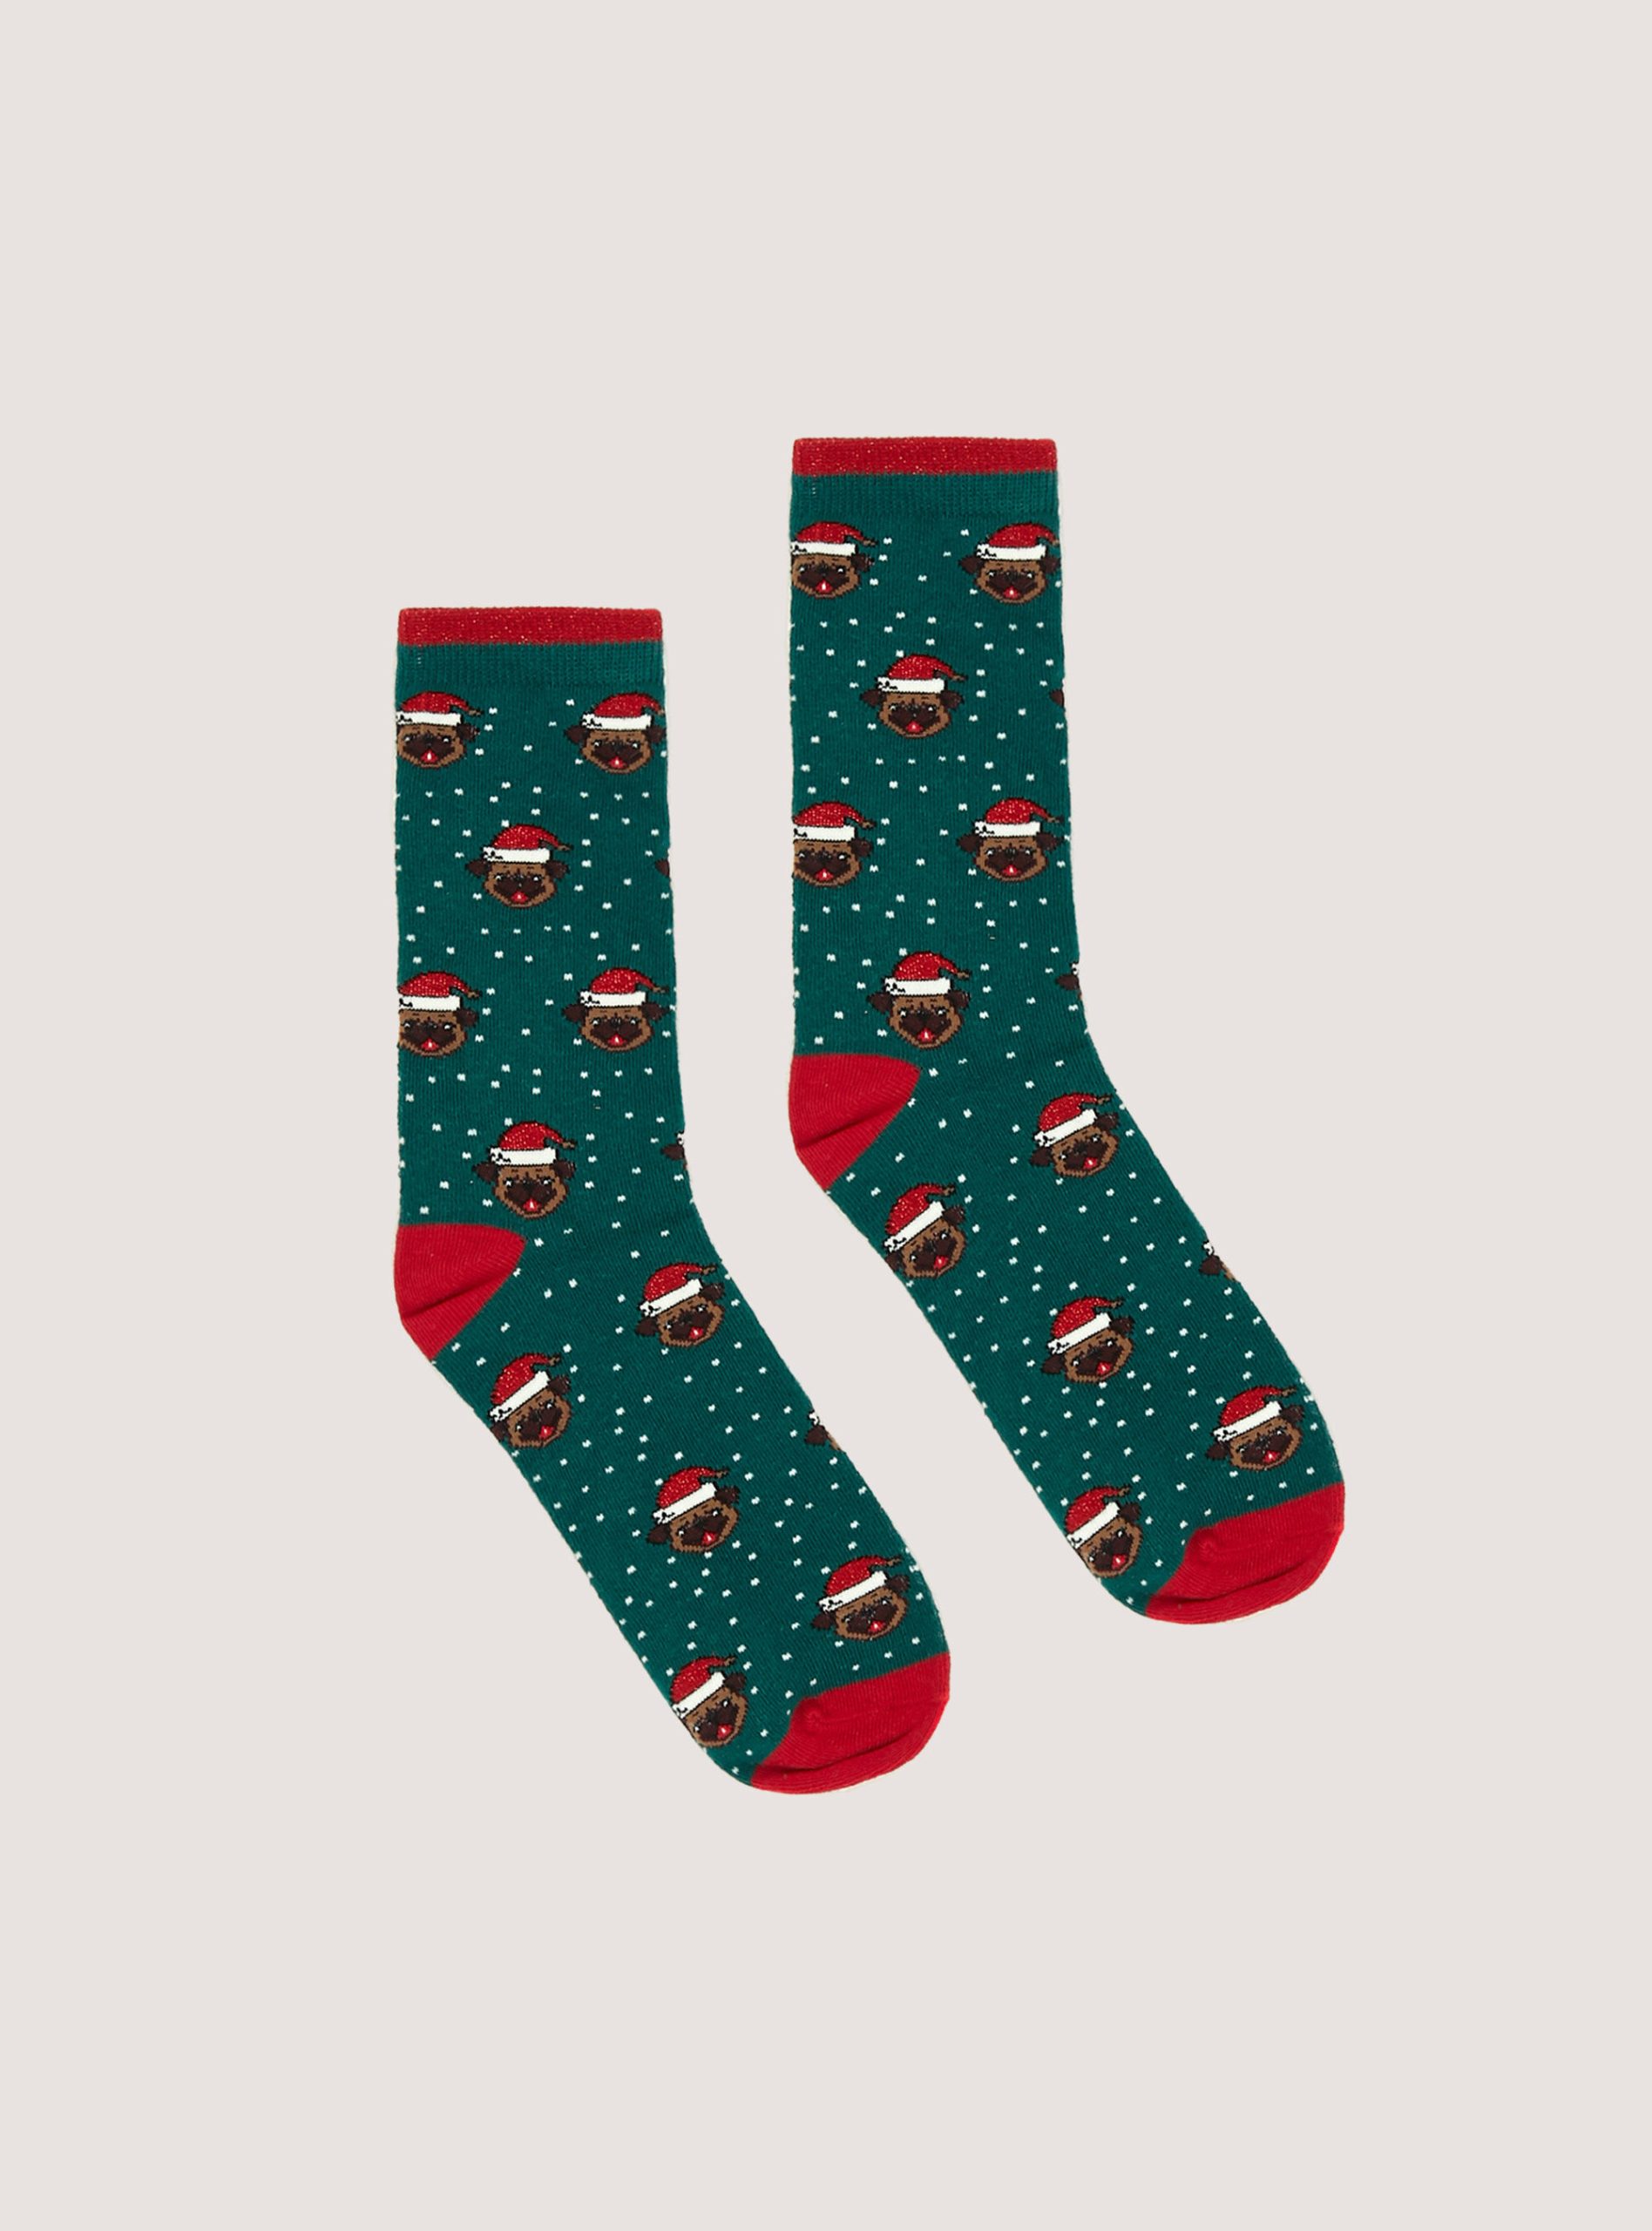 Alcott Socken Frauen Rein Reindeer Effizienz Set Of 2 Pairs Of Christmas Socks – 2